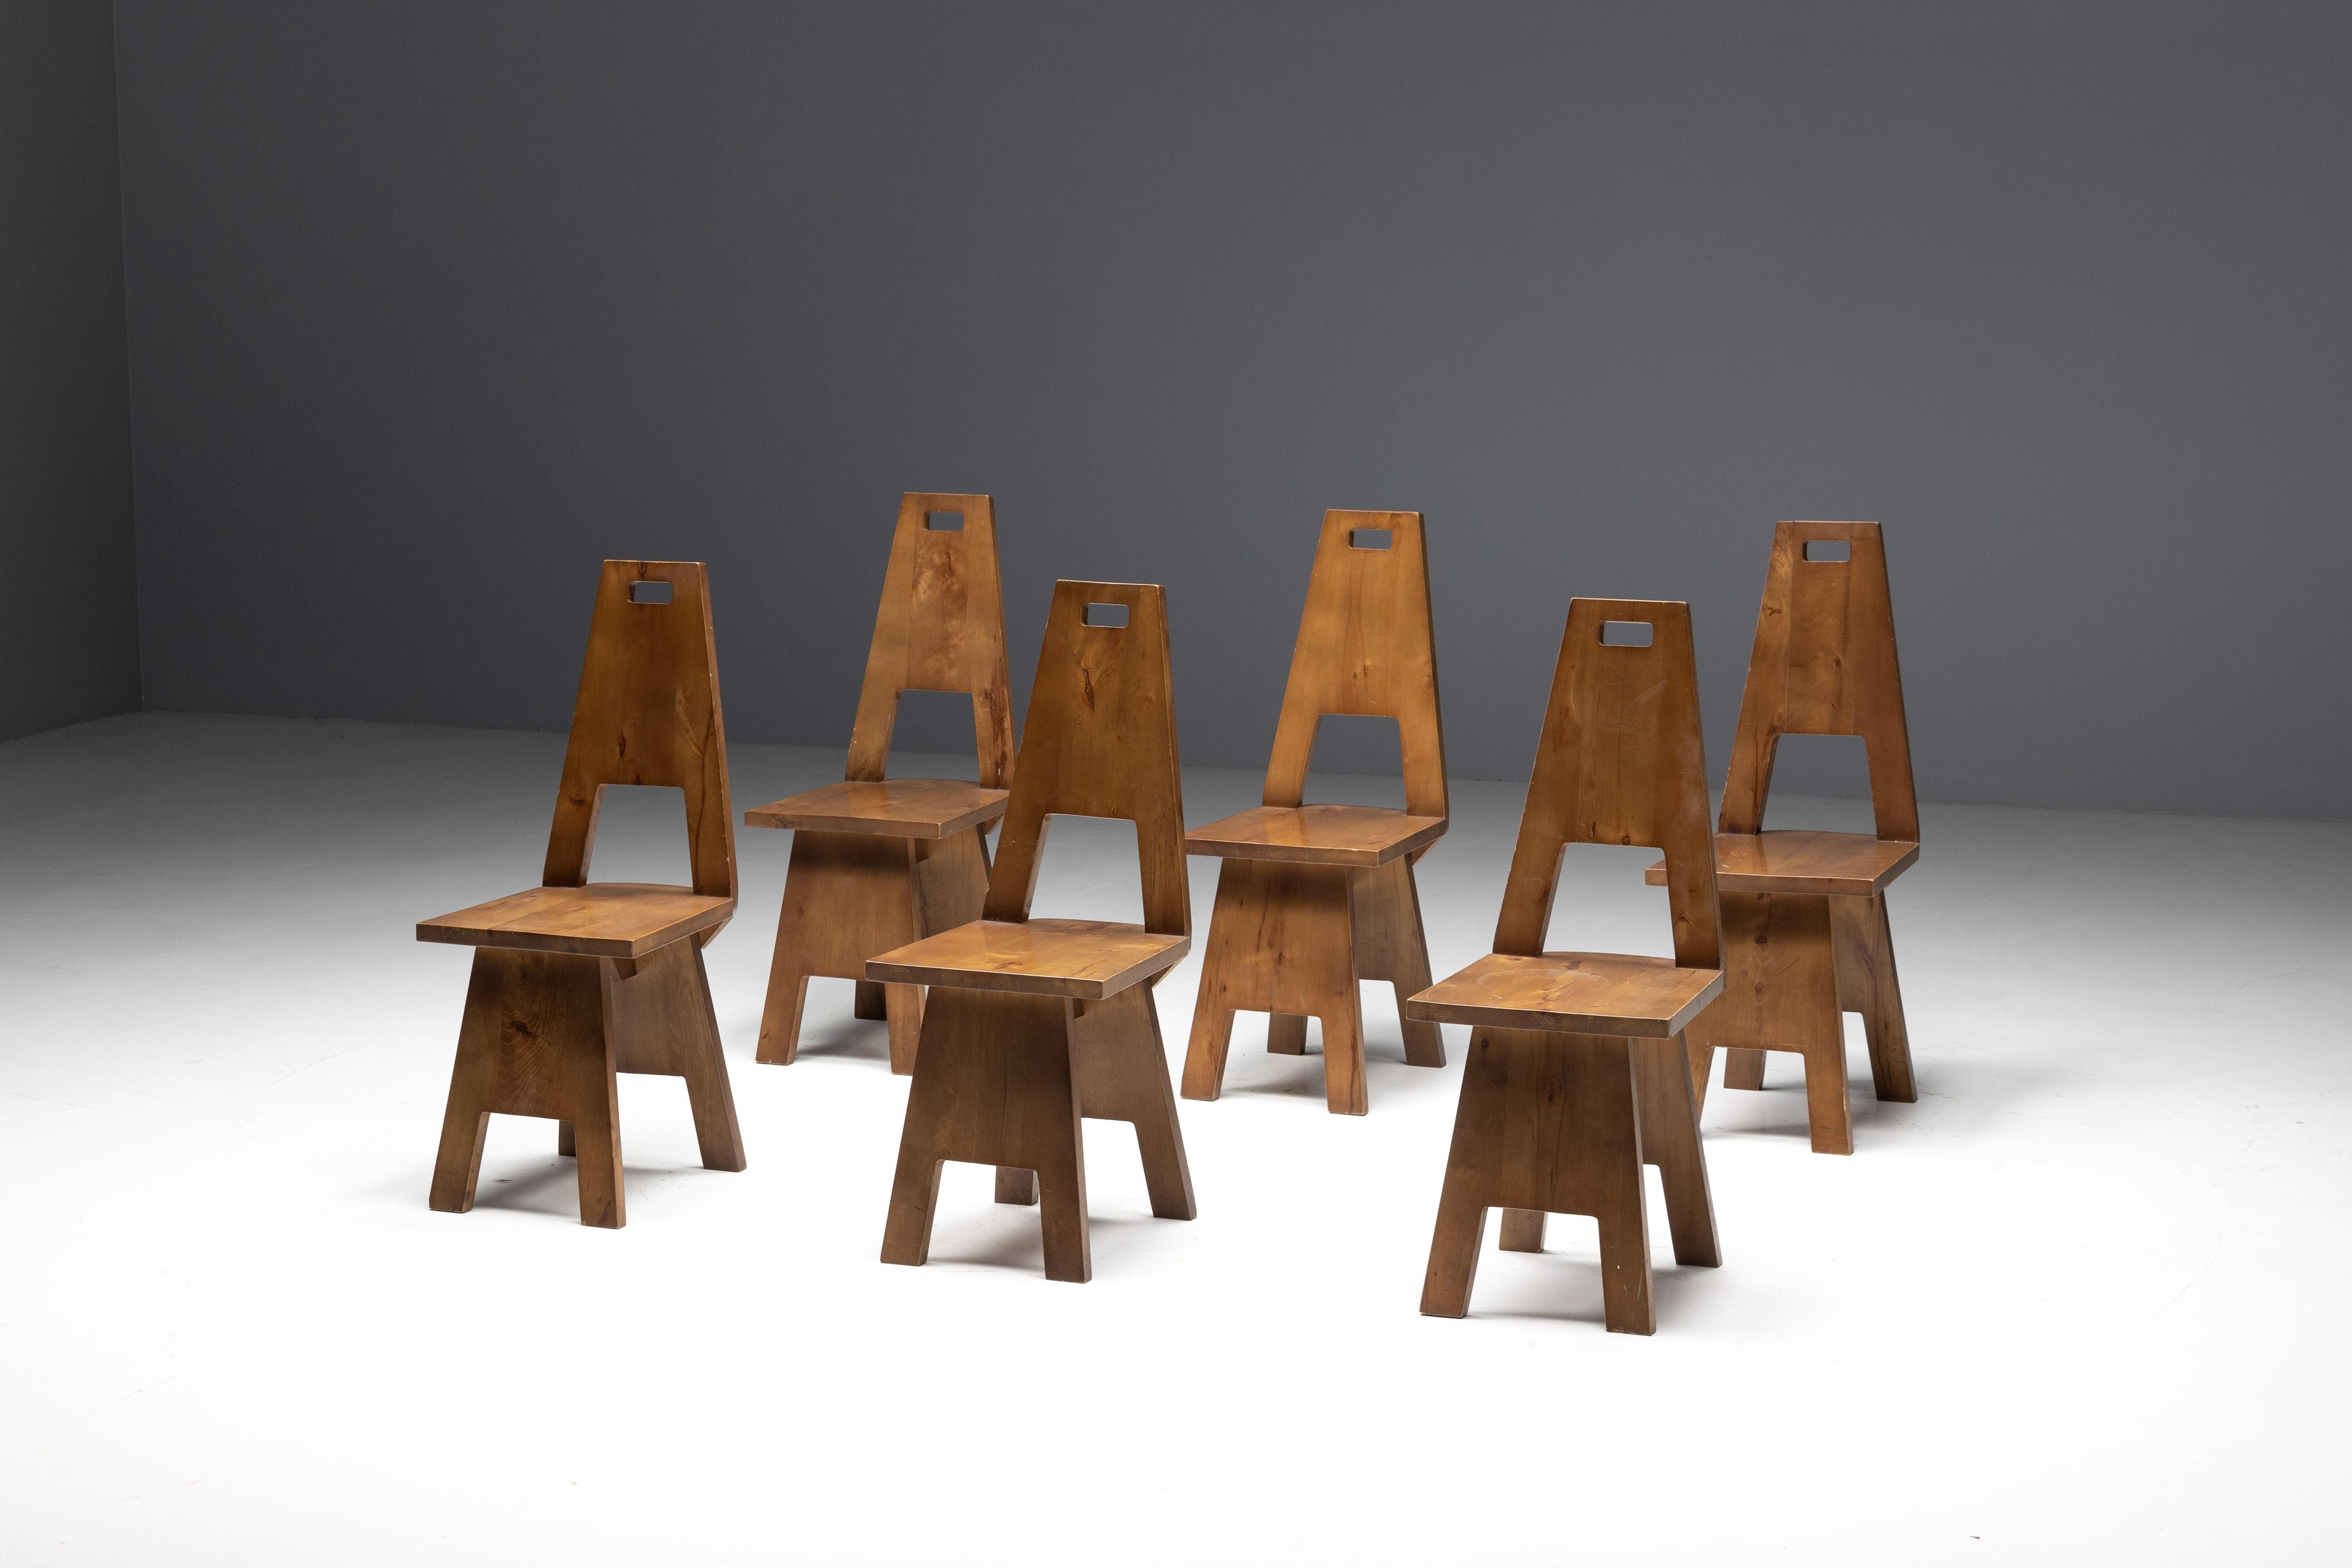 Sculptural Brutalist Wabi Sabi Chairs, Netherlands, 1960s For Sale 4